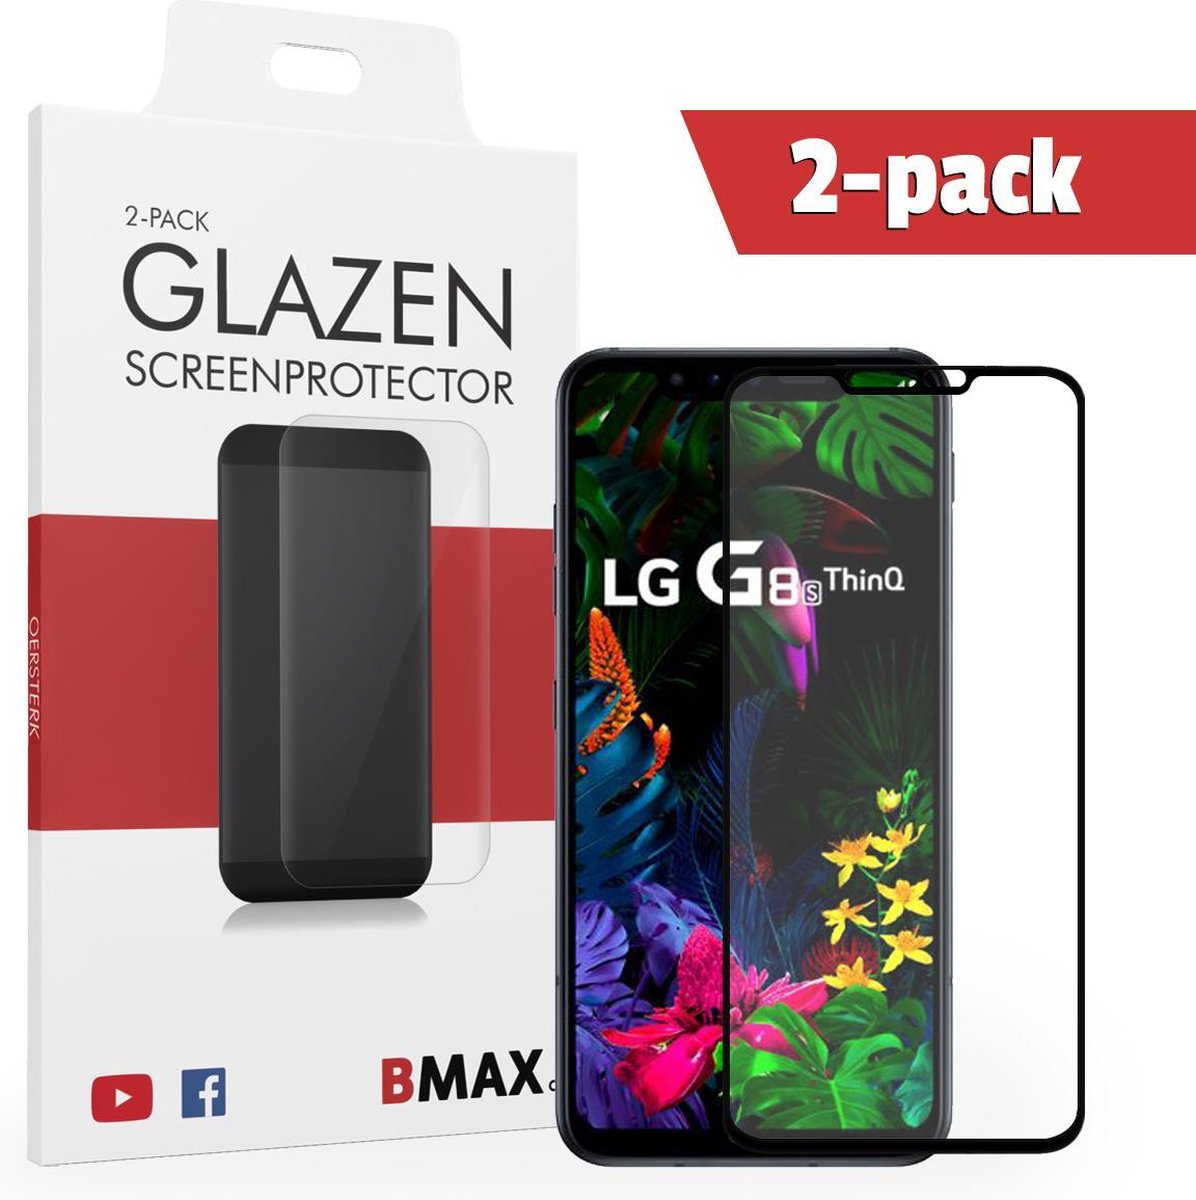 2-pack Bmax Lg G8s Thinq Screenprotector - Glass - Full Cover 2.5d - Black